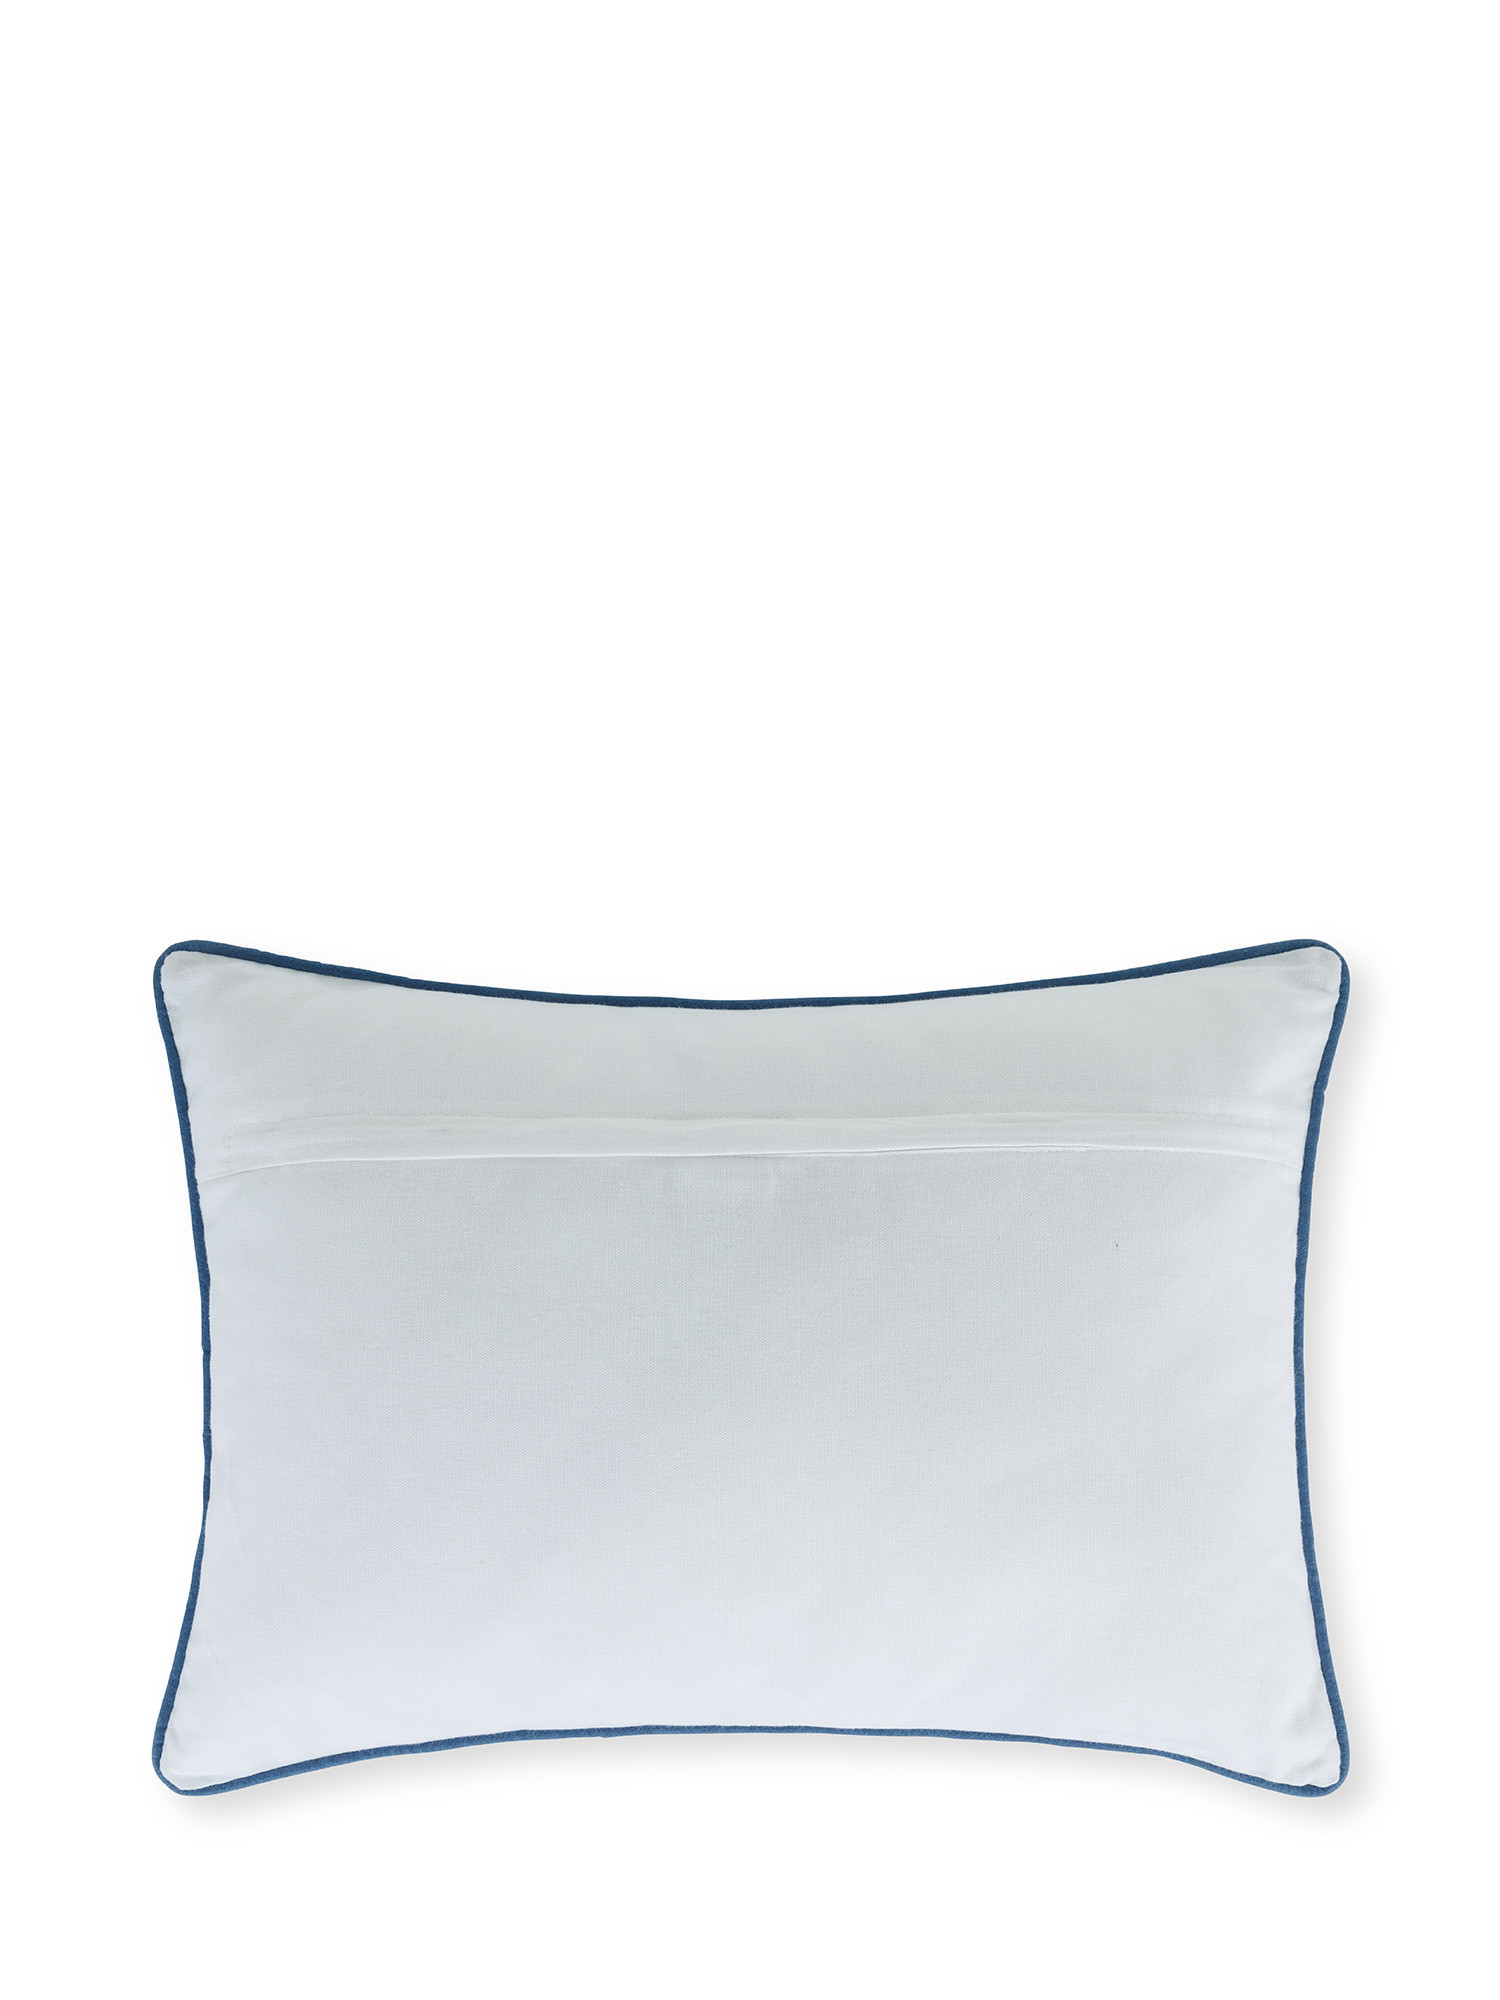 Nutcracker theme embroidered cushion 35x50 cm, Blue, large image number 1